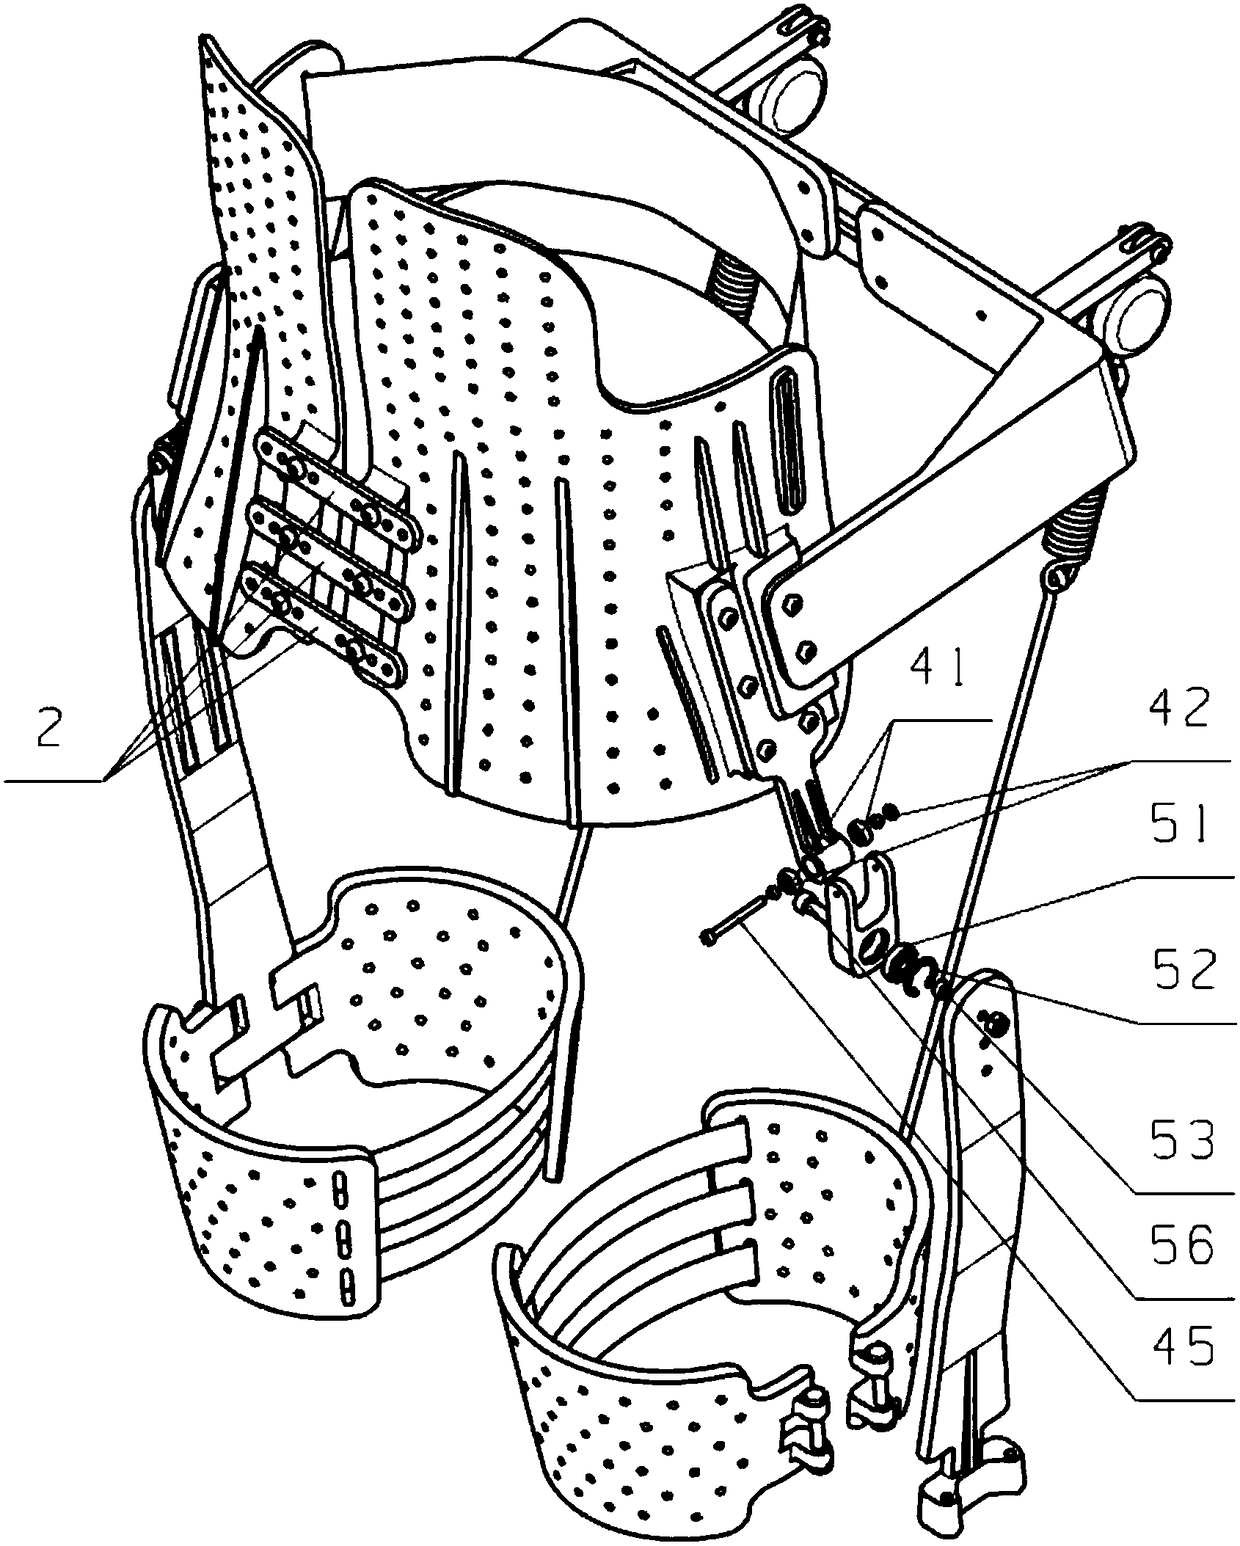 Hip joint passive exoskeleton device based on energy time-sharing regulation